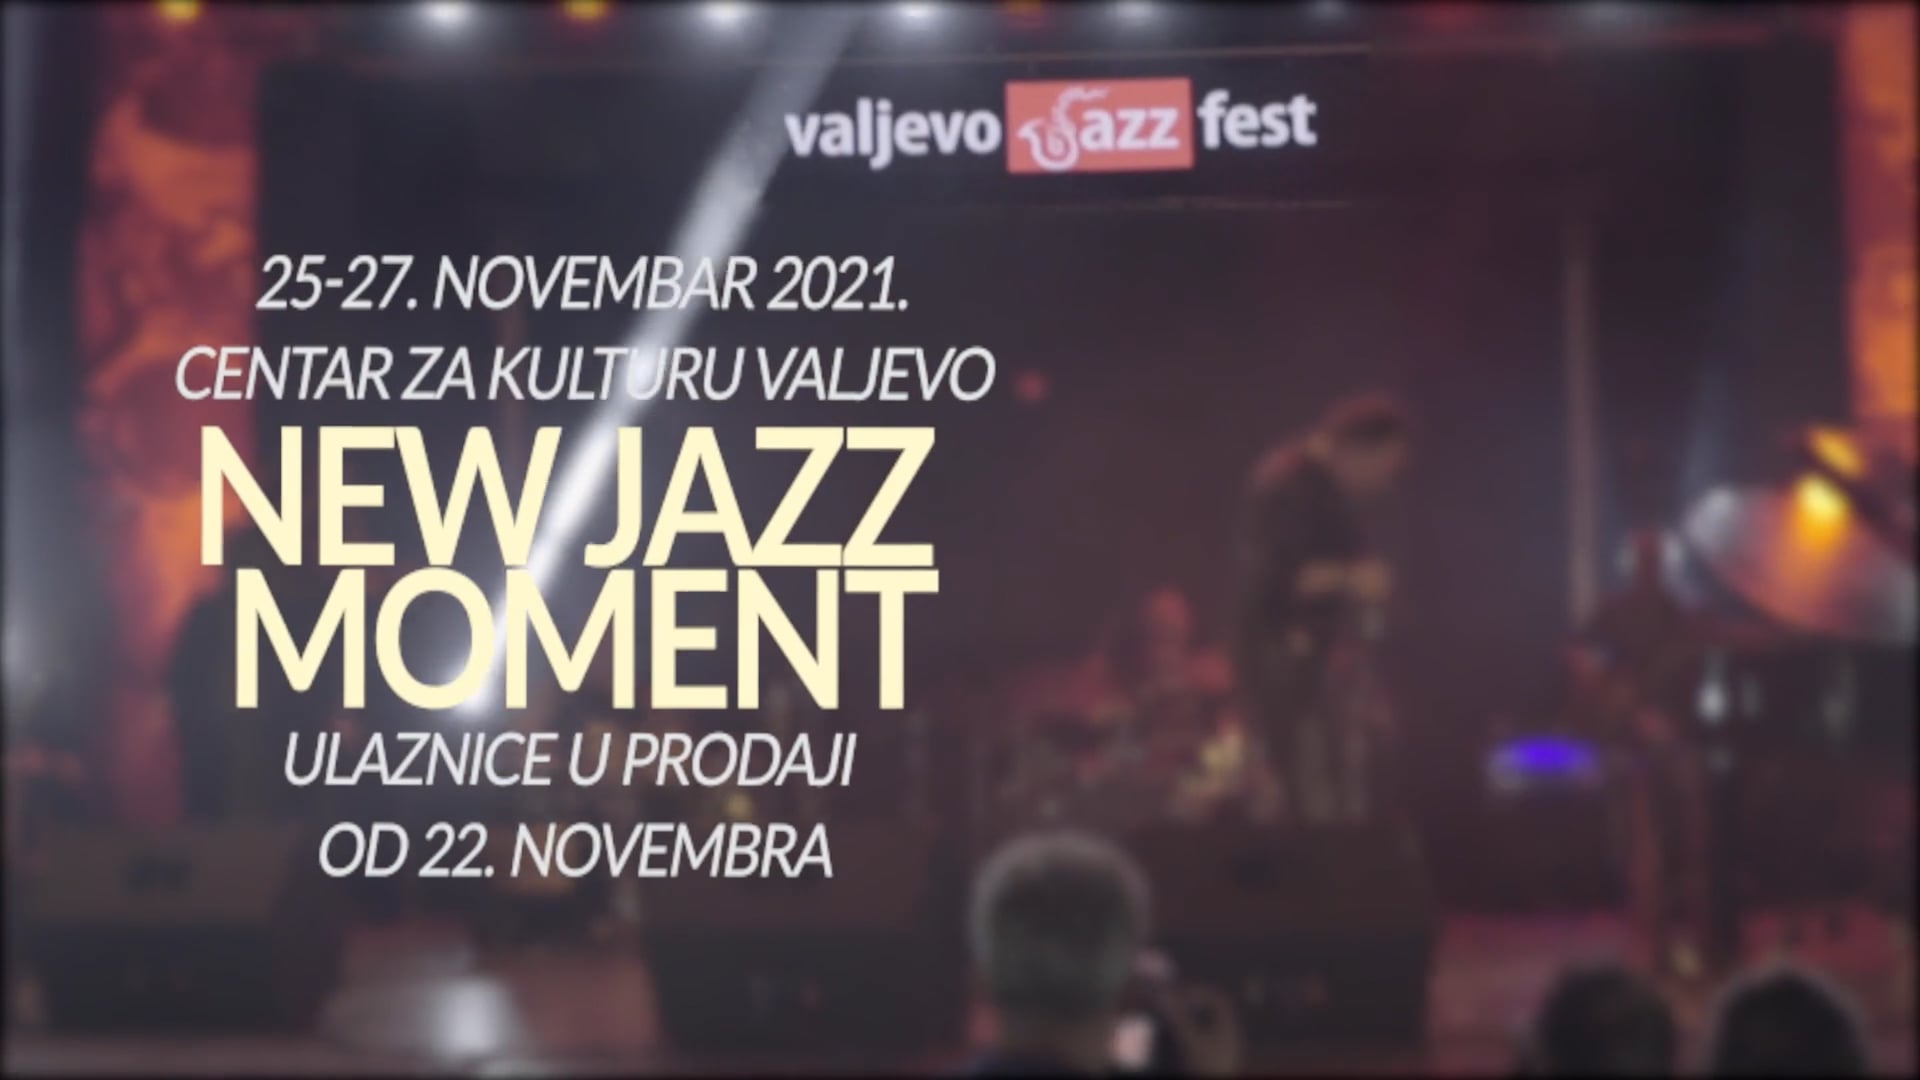 Jazz fest 2021 promo